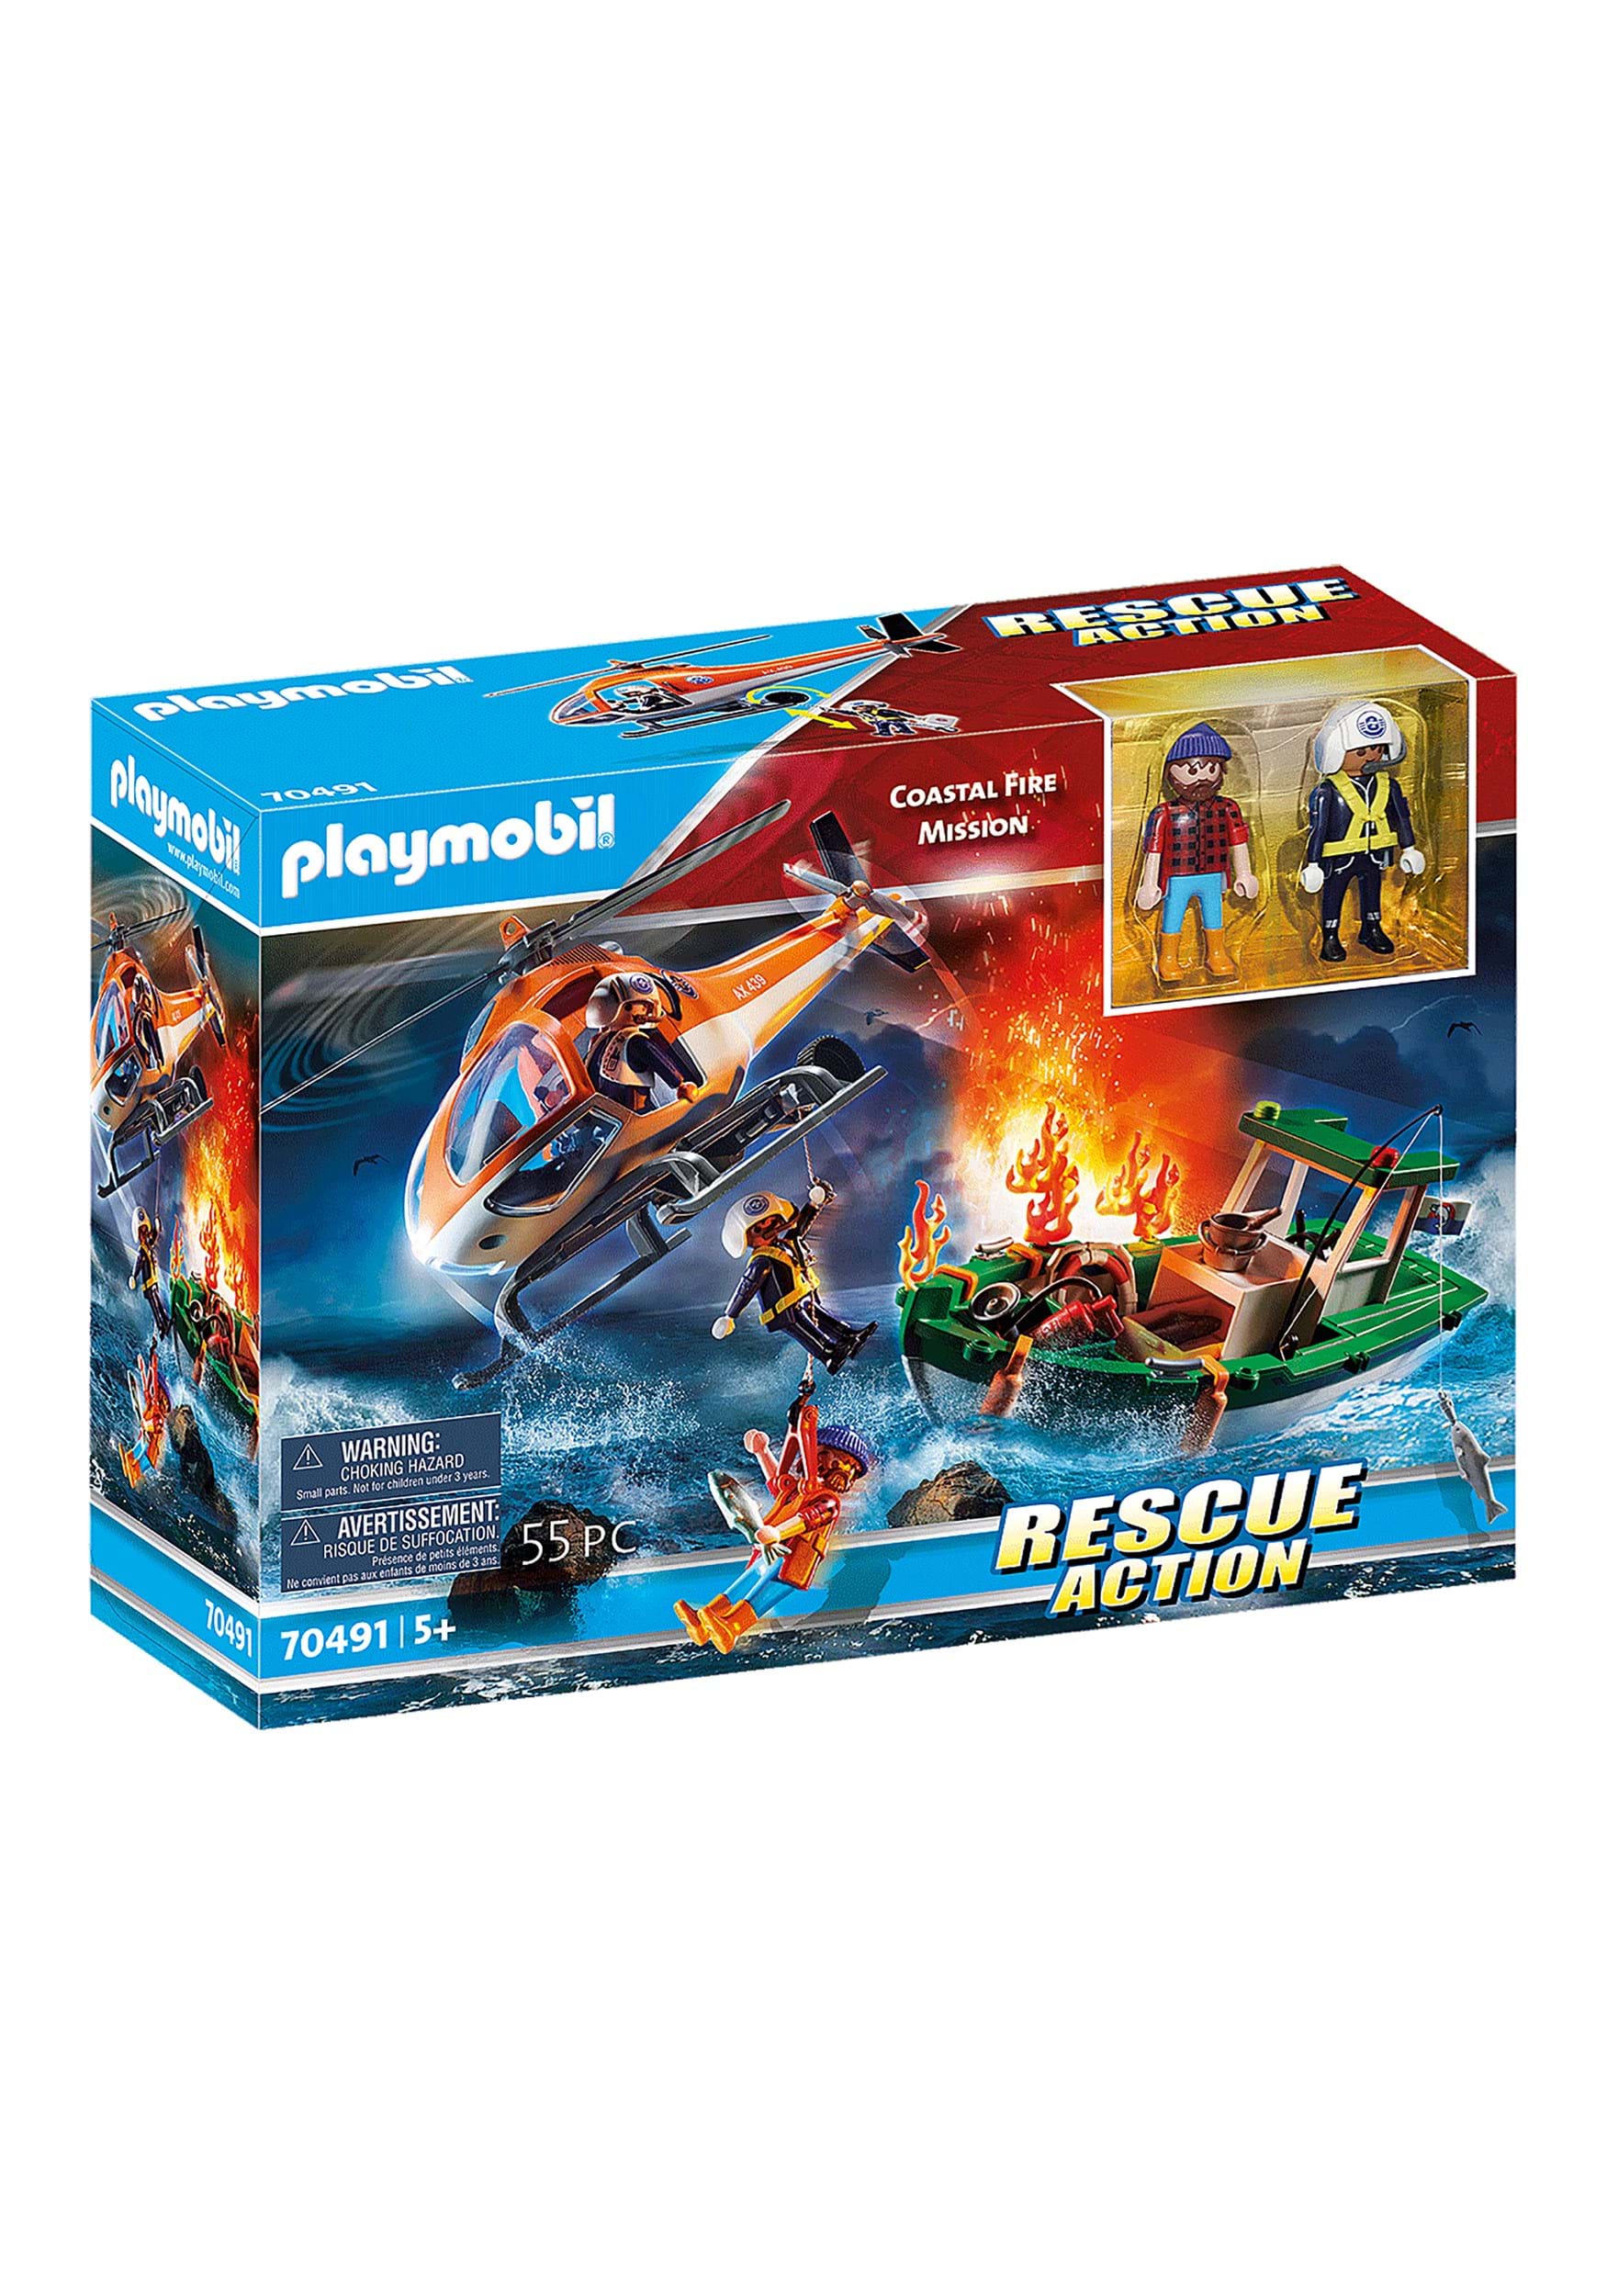 Coastal Fire Mission Playmobil Playset